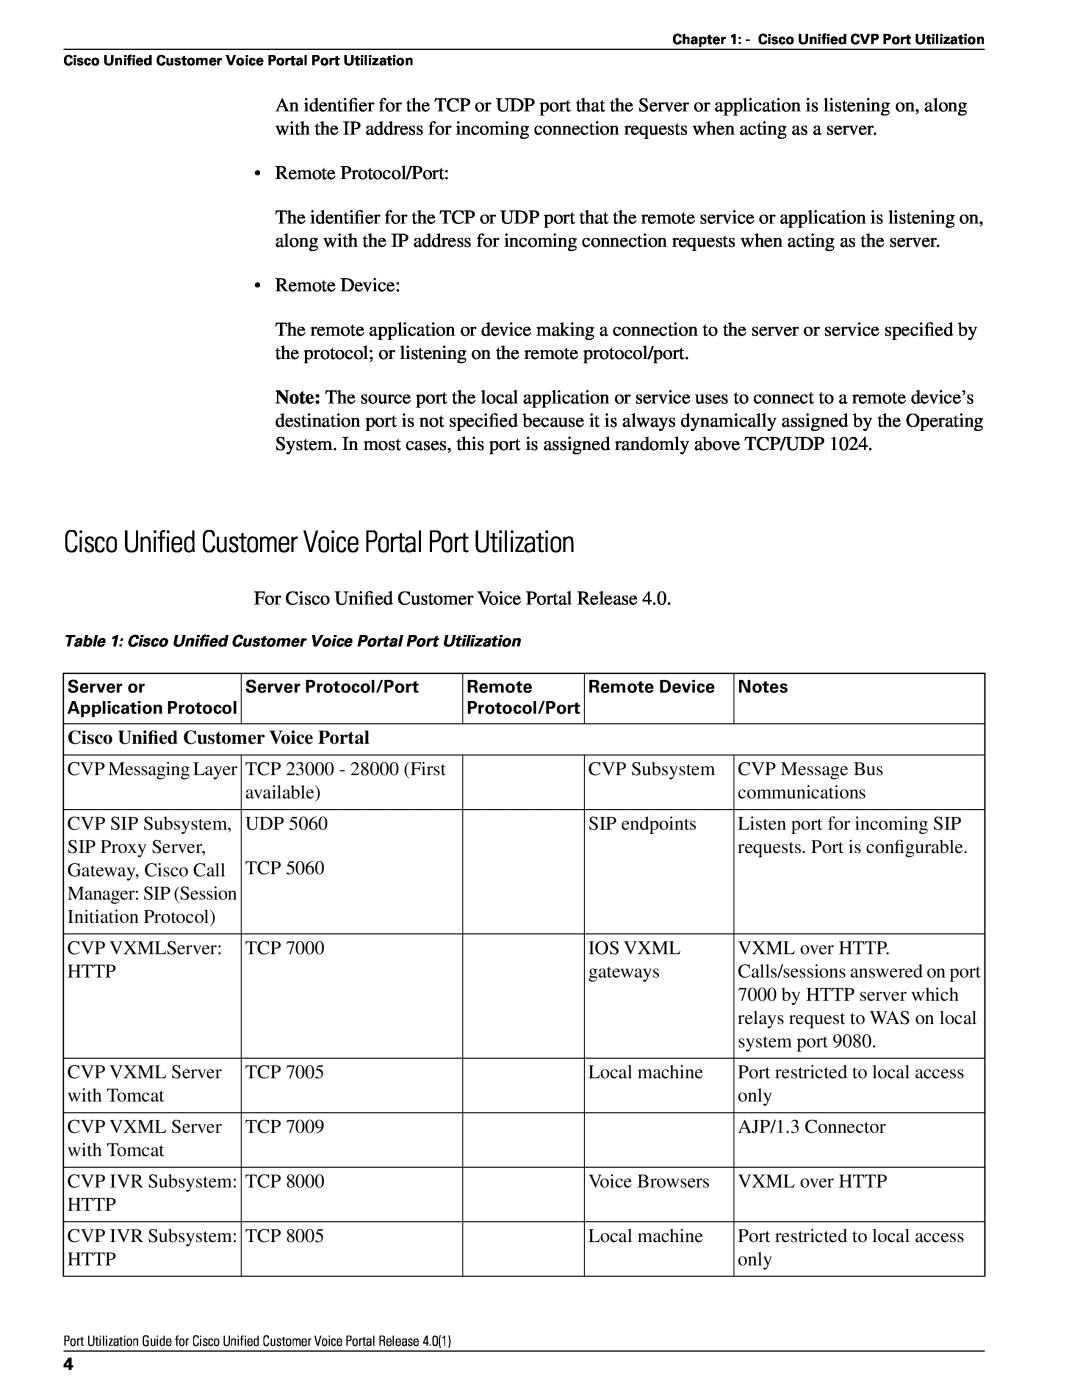 Cisco Systems 4.0(1) manual Cisco Unified Customer Voice Portal Port Utilization 